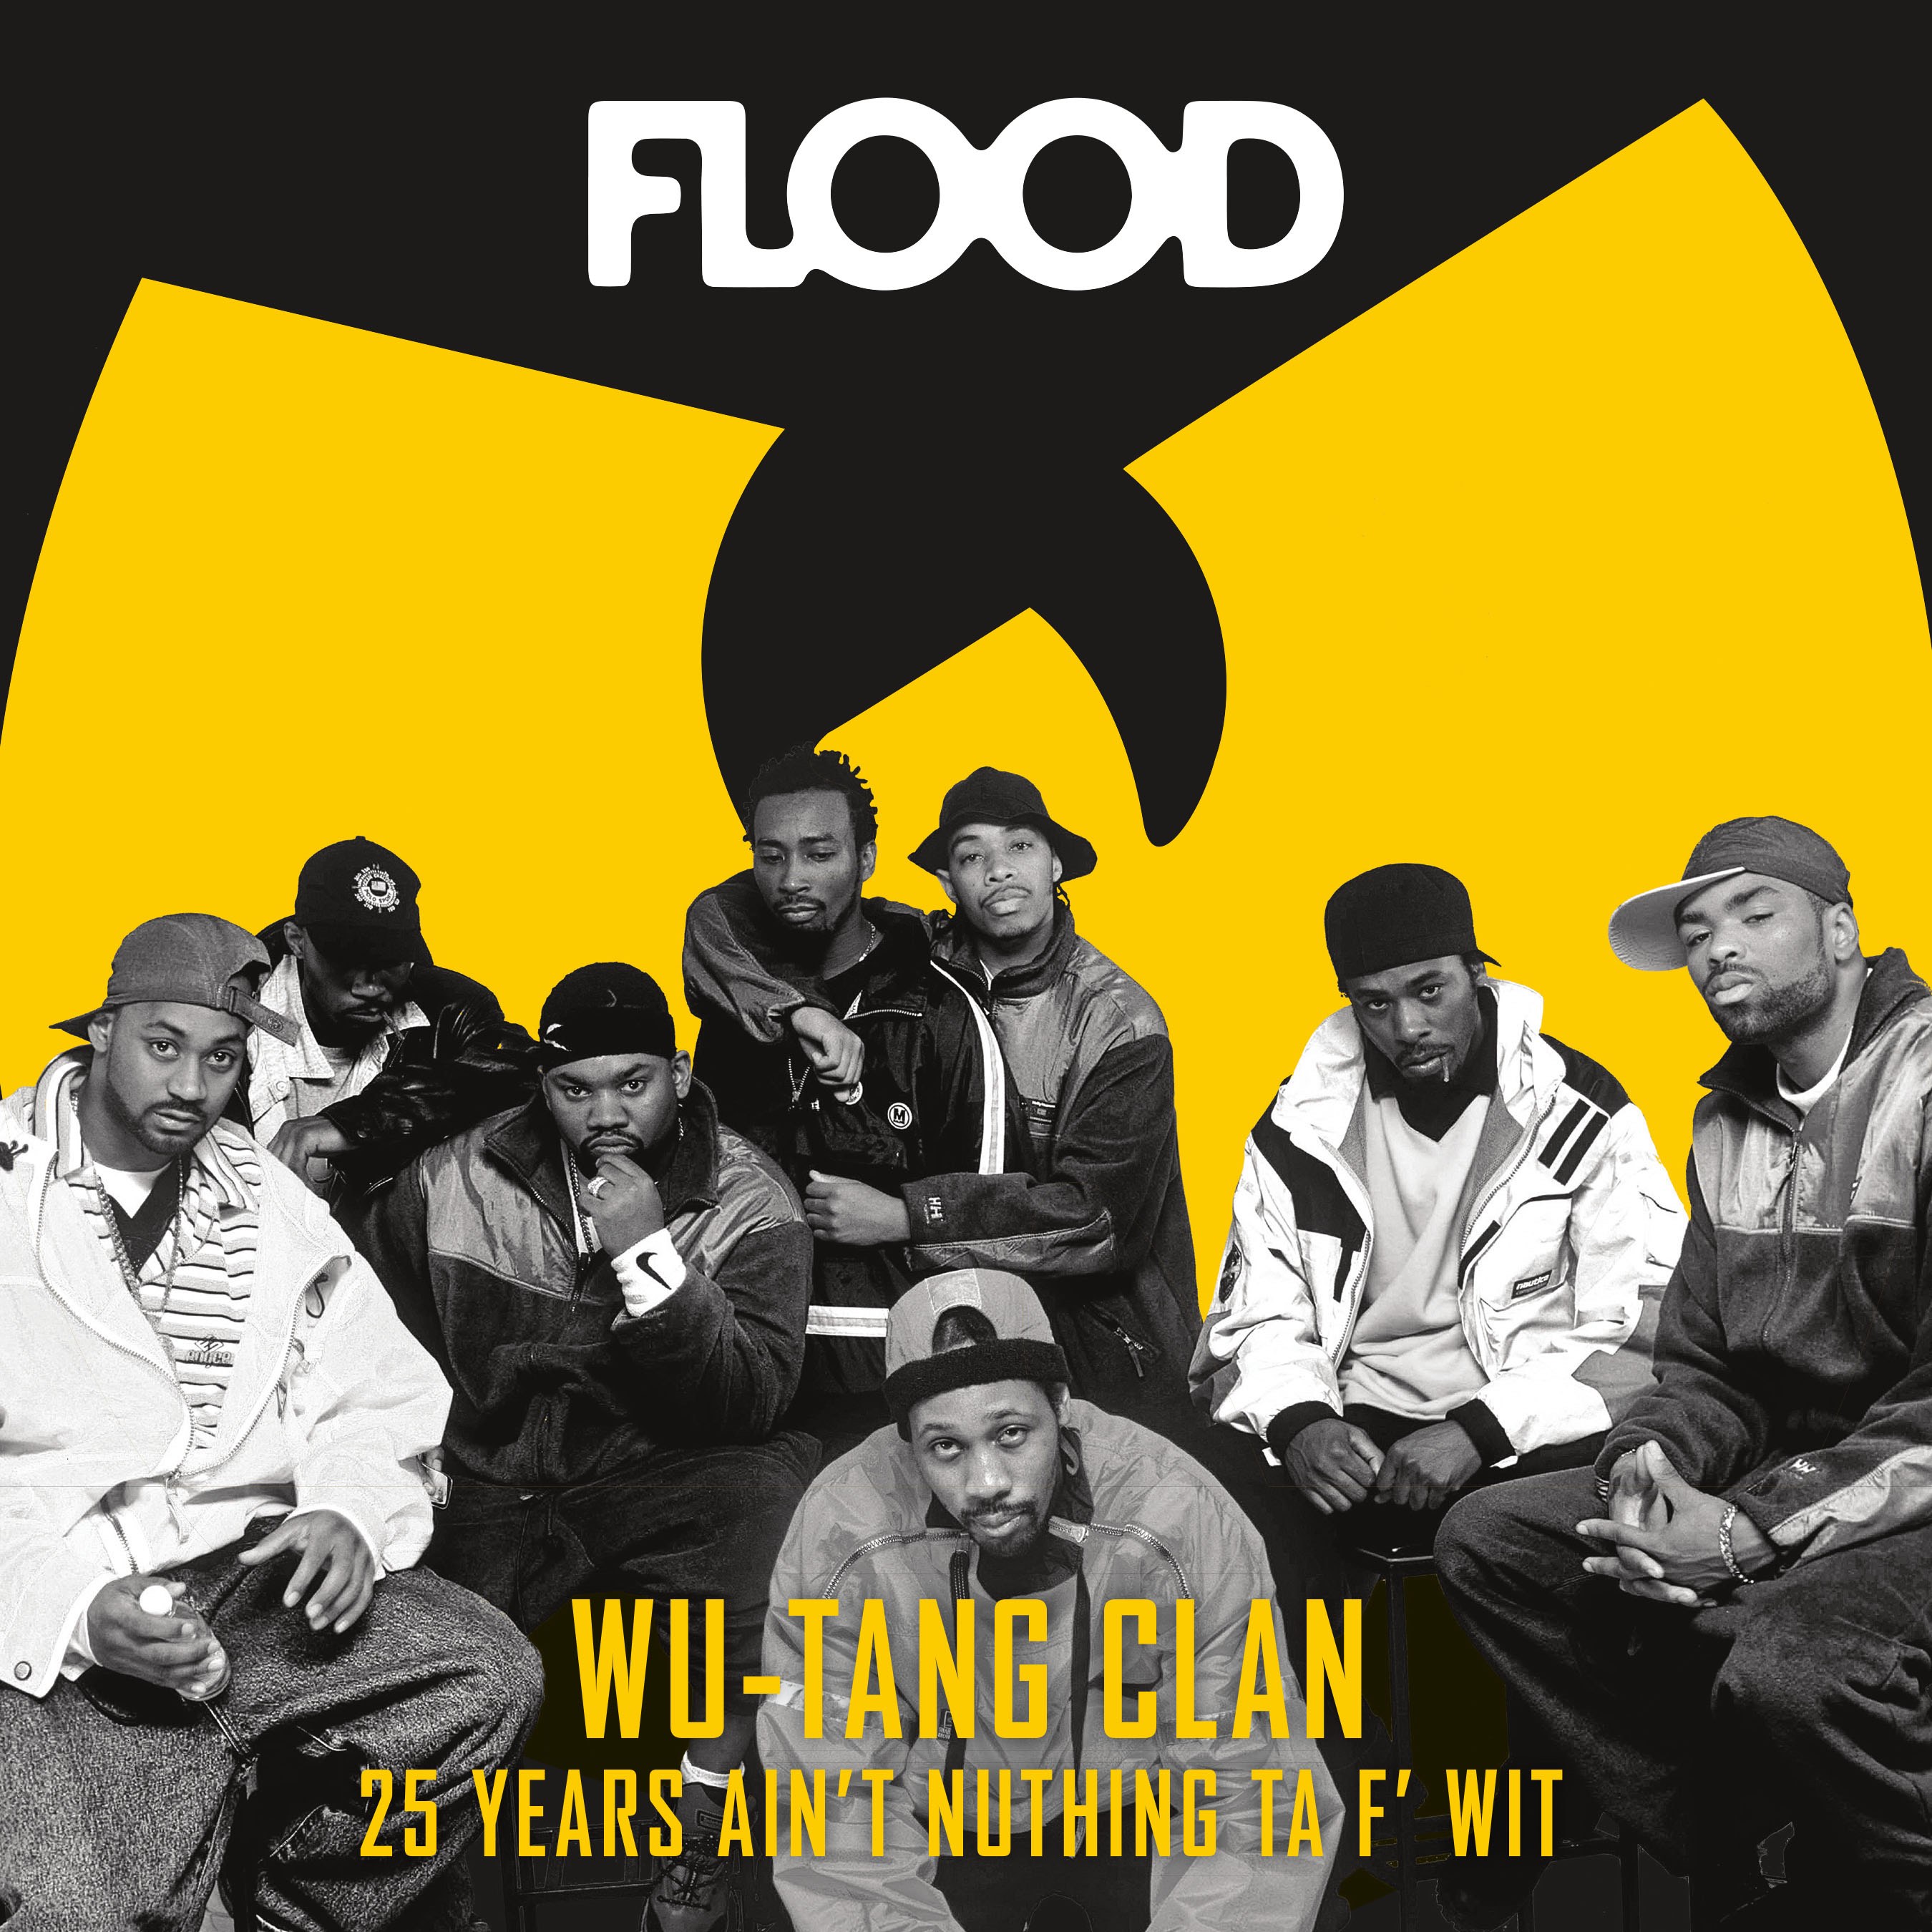 Wu-Tang Clan - Back to the beginning! #wutang #tbt